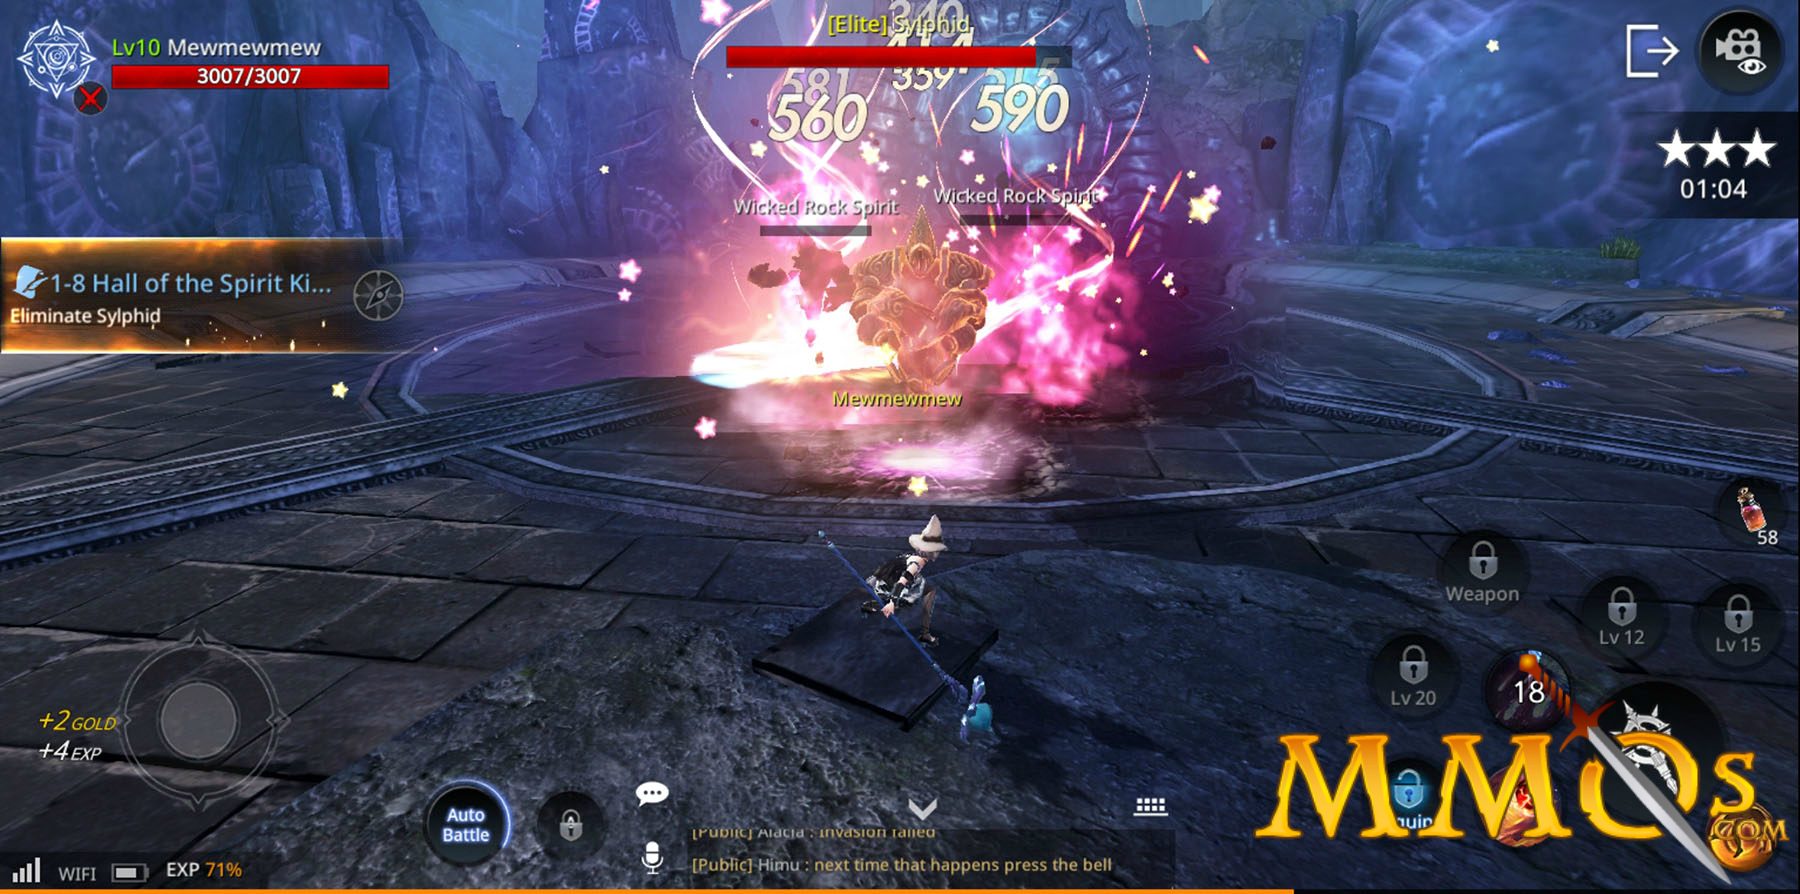 AxE - Alliance x Empire Android Gameplay (Open World MMORPG) (by NEXON)  (CBT) (KR) 